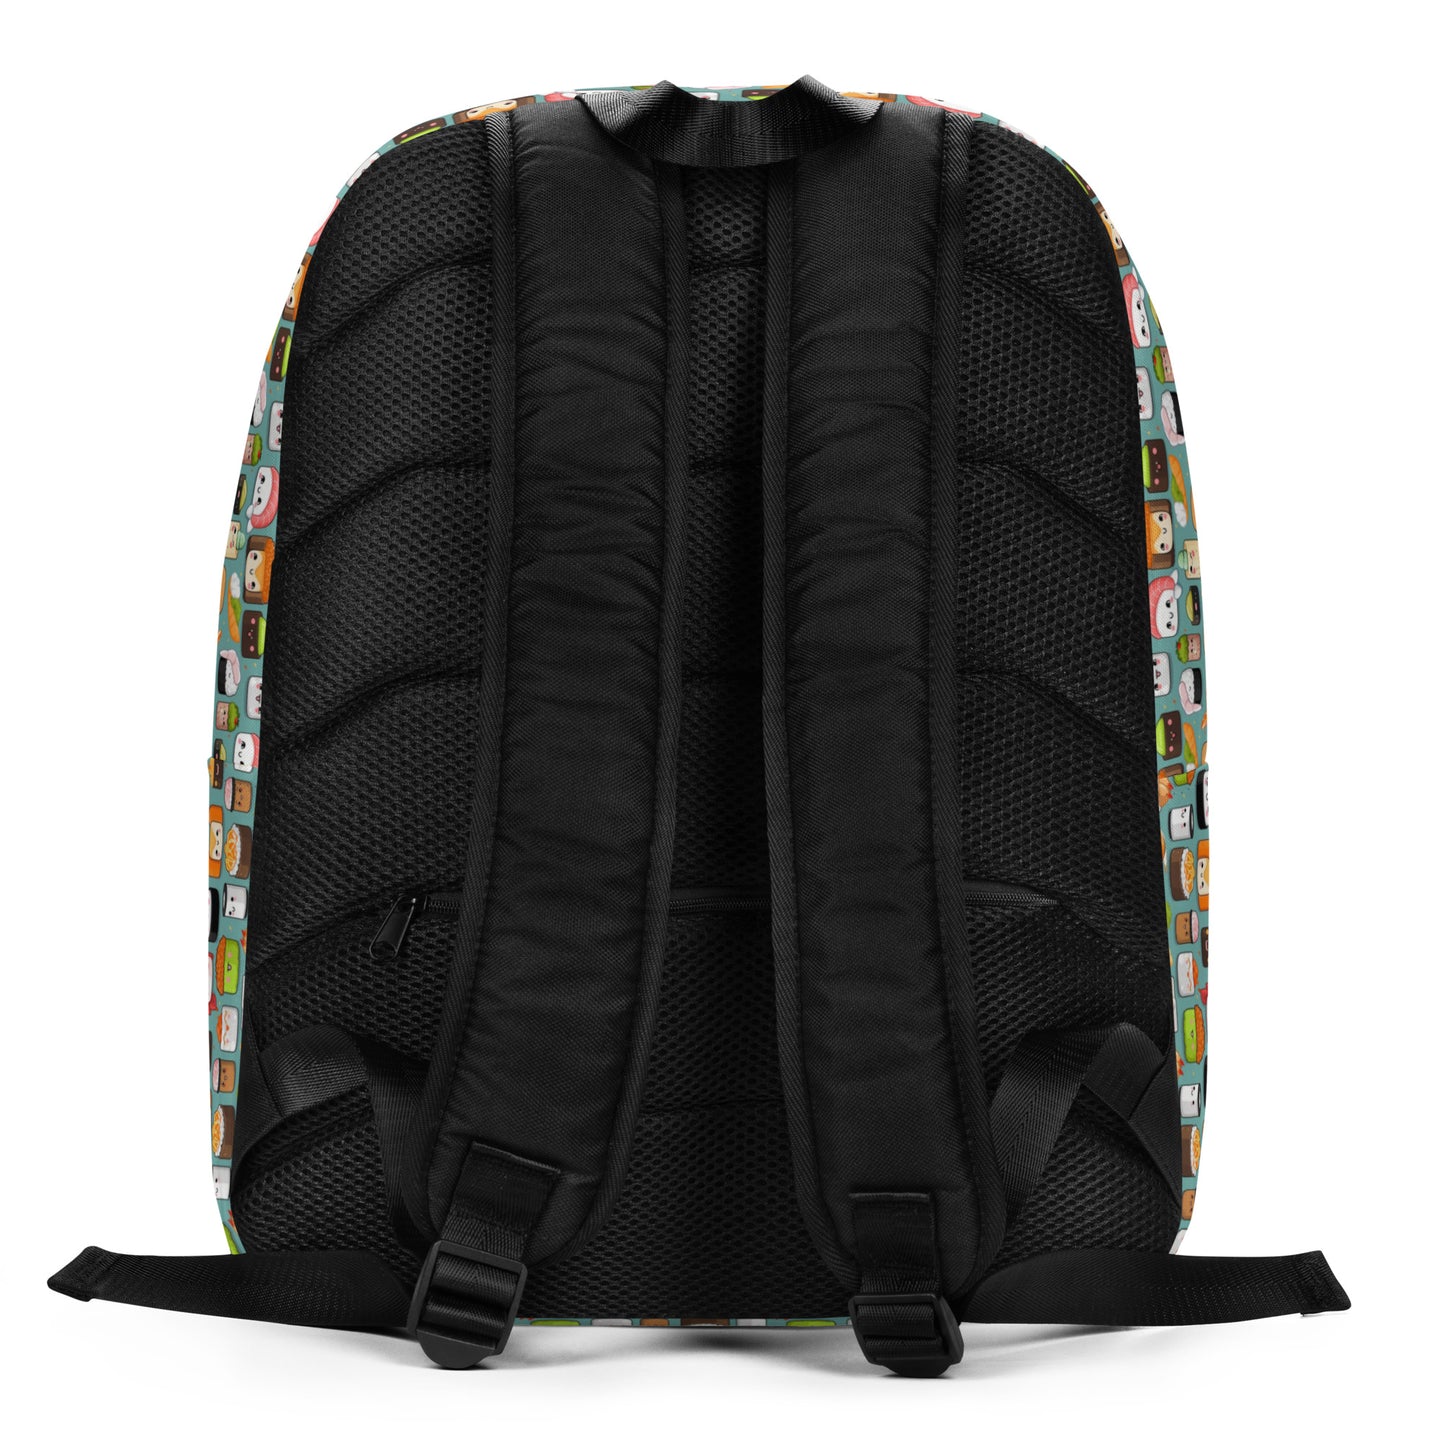 Sushi time Minimalist Backpack, Backpack with 15" inside pocket for Laptop, Hidden Pocket for Wallet, Lightweight well made